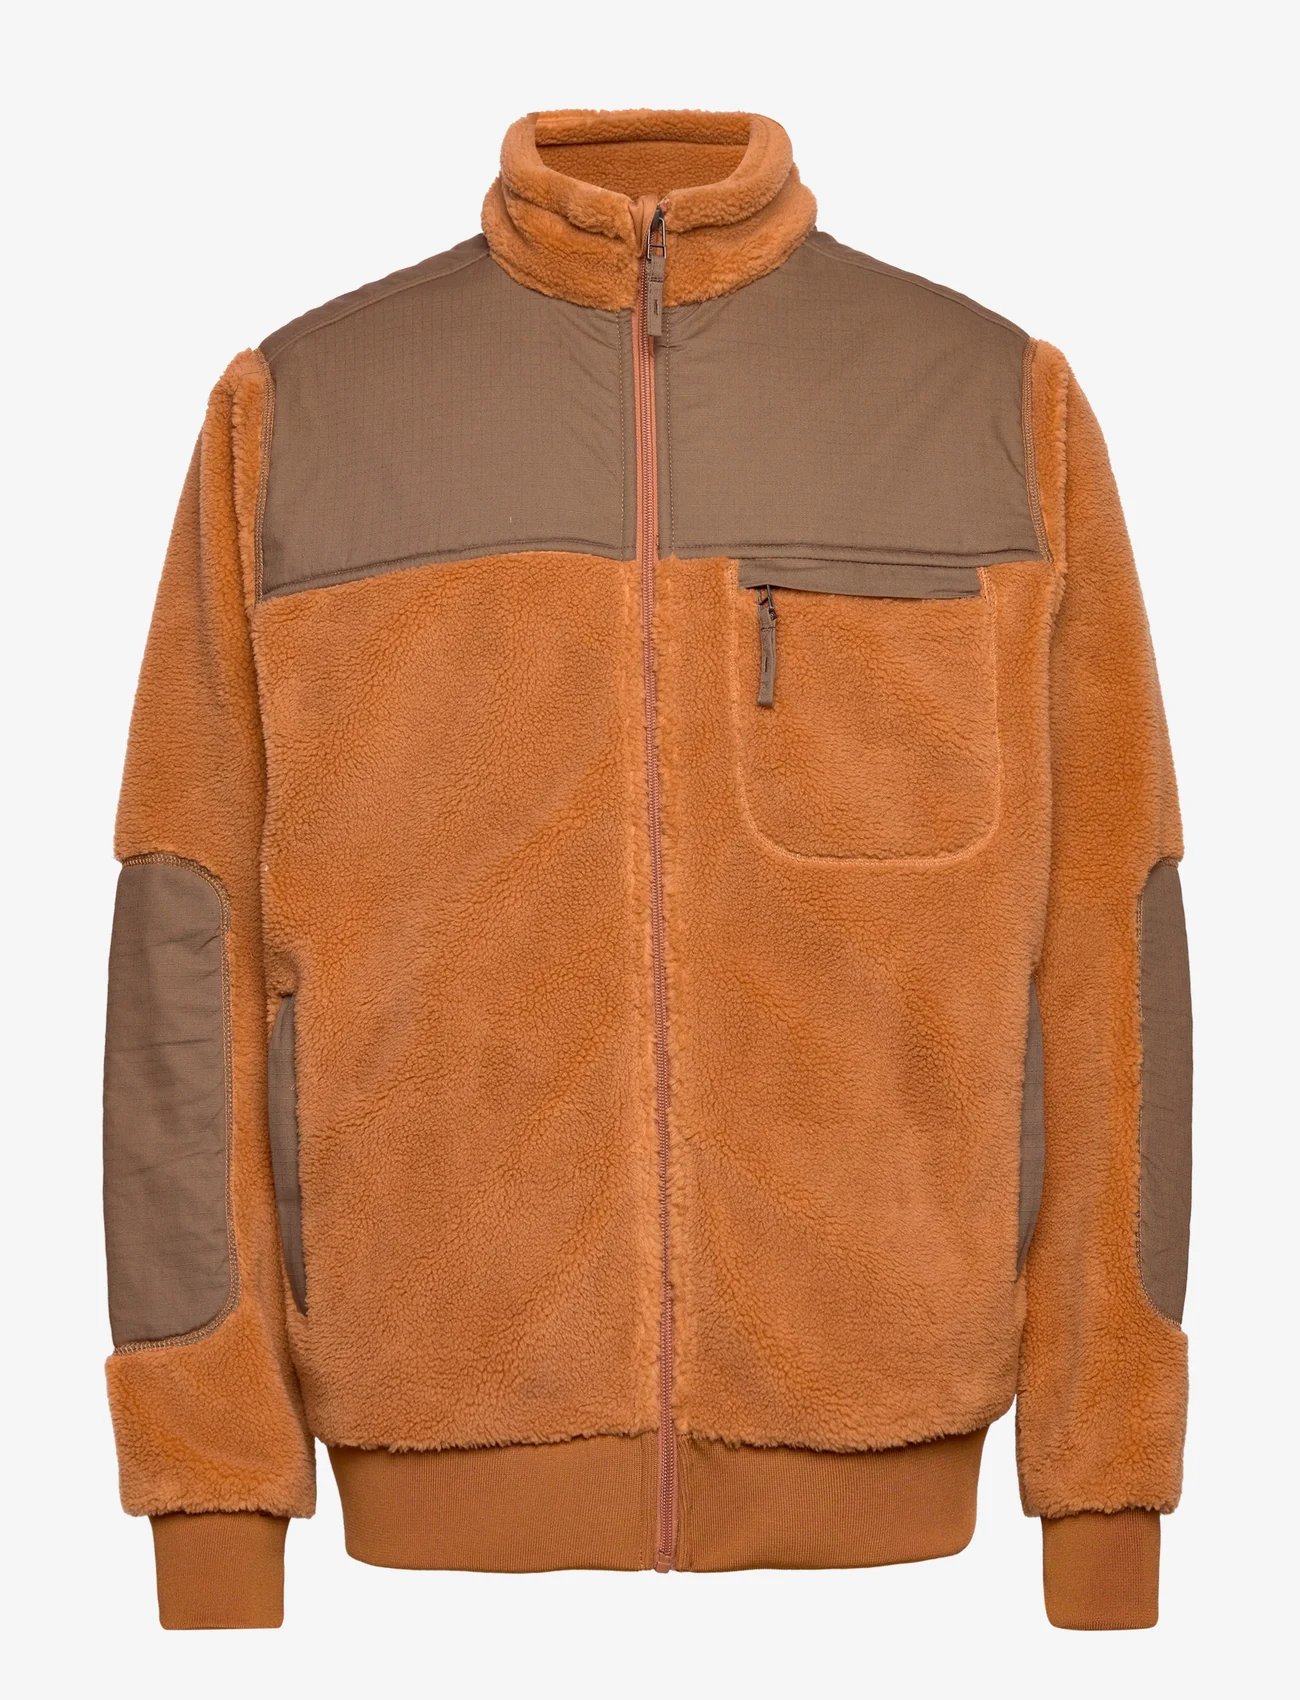 Kronstadt - Kayson Teddy rib zip jacket - mid layer jackets - light tobacco - 0